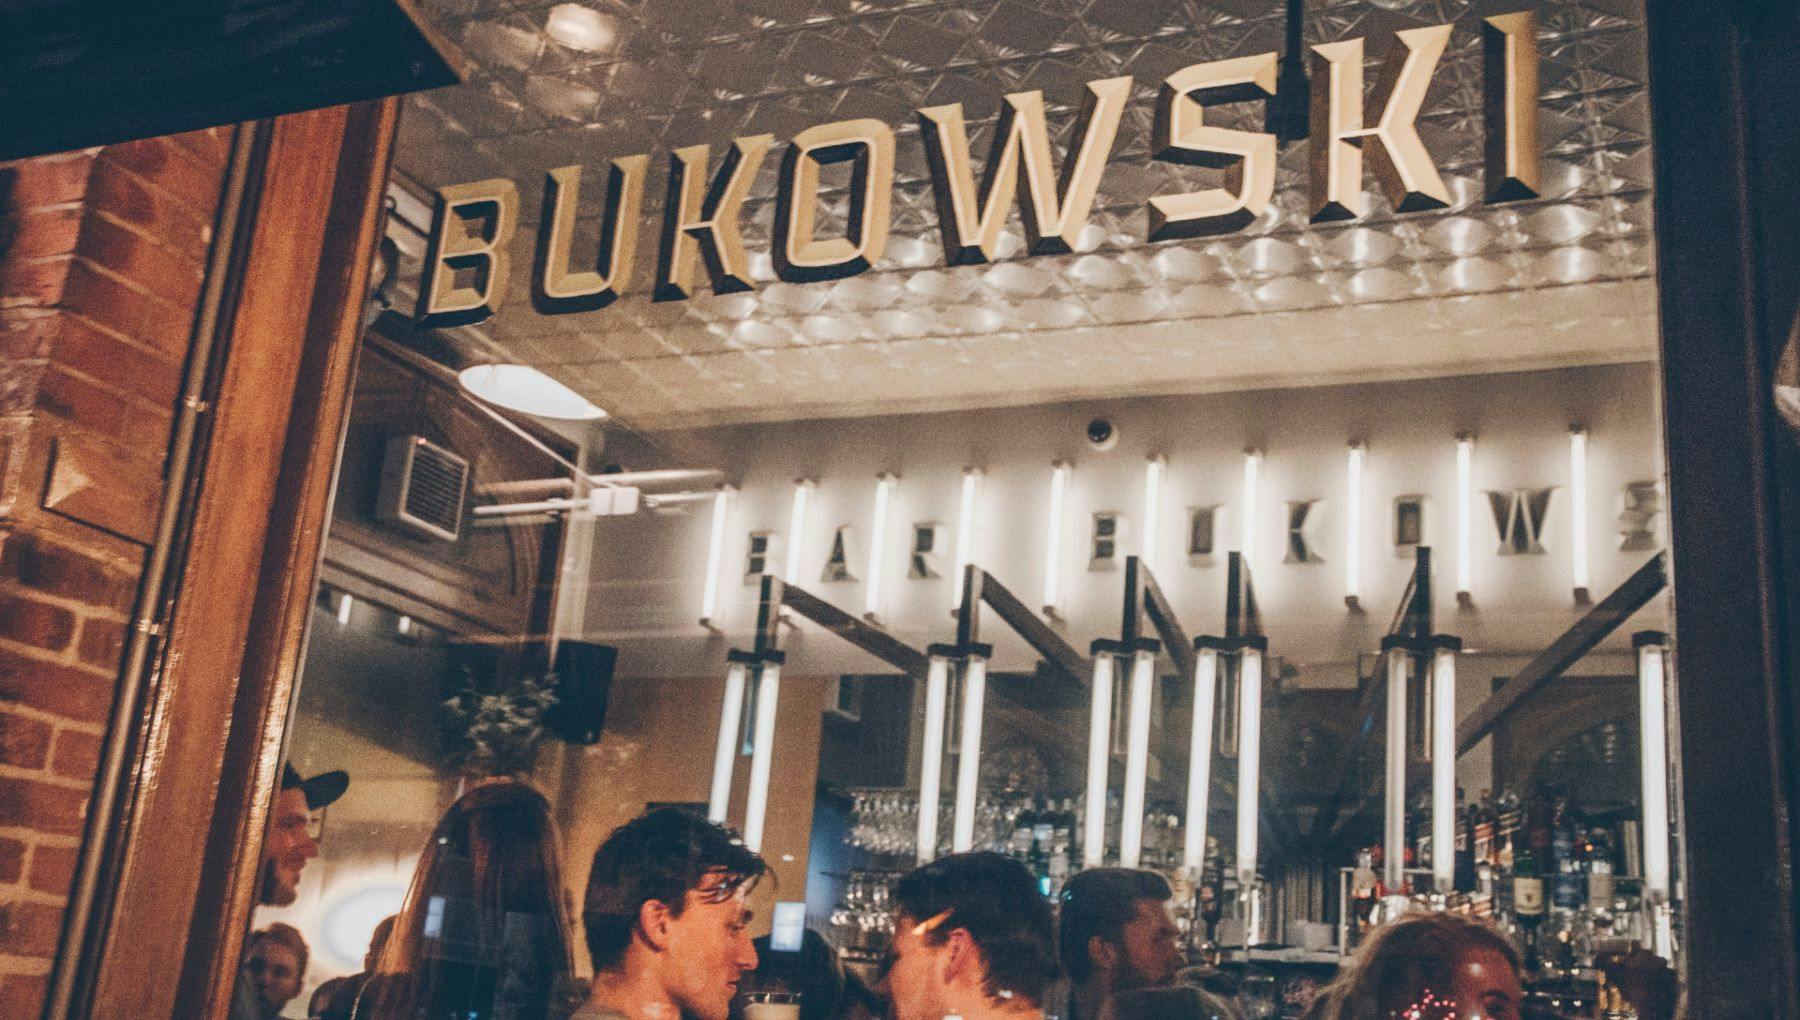 Bar Bukowski café-restaurant exterior